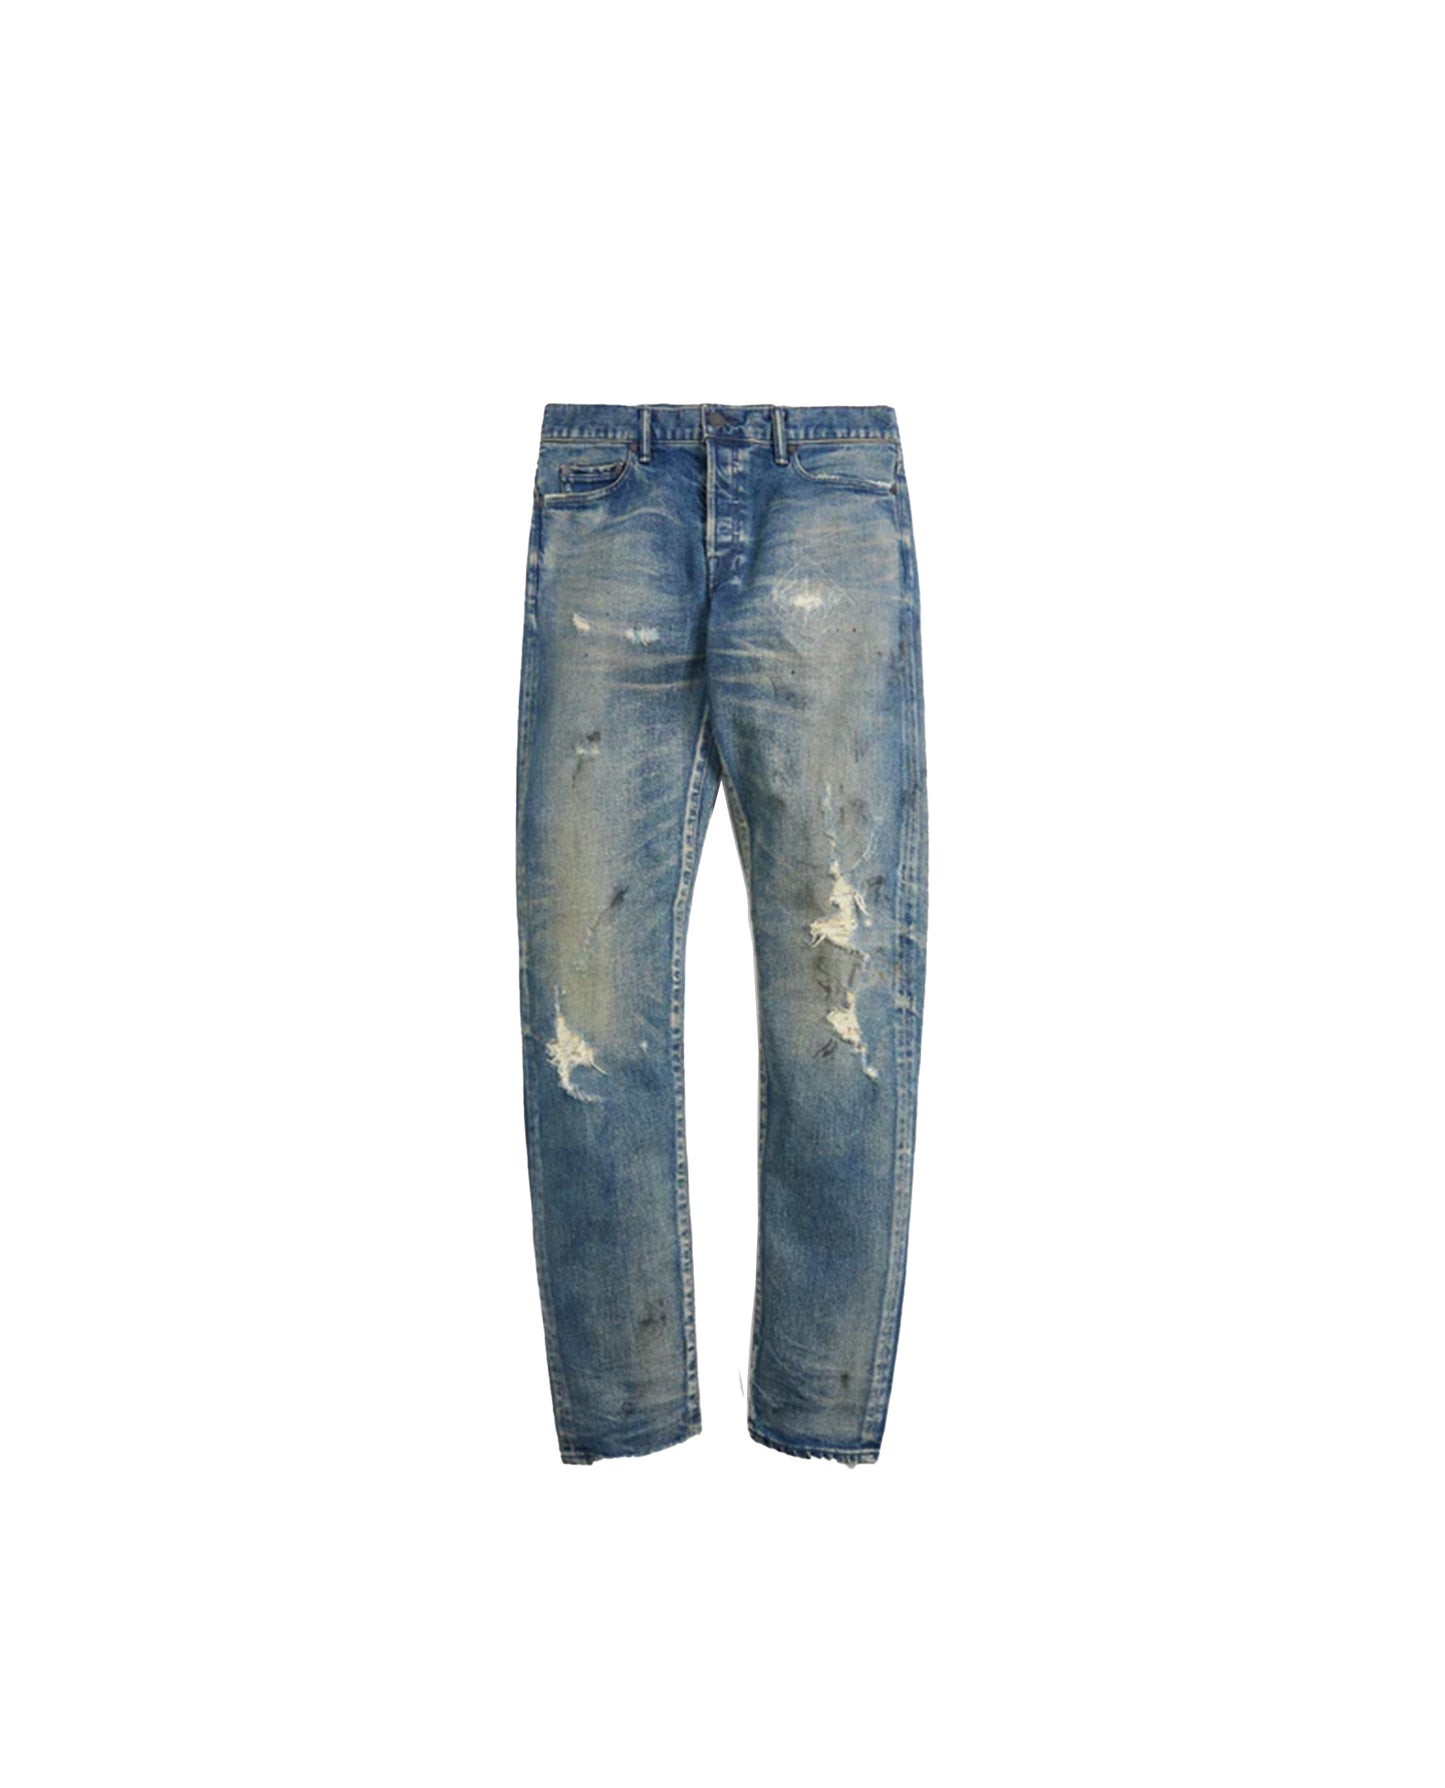 The Cast 2 distressed denim jeans